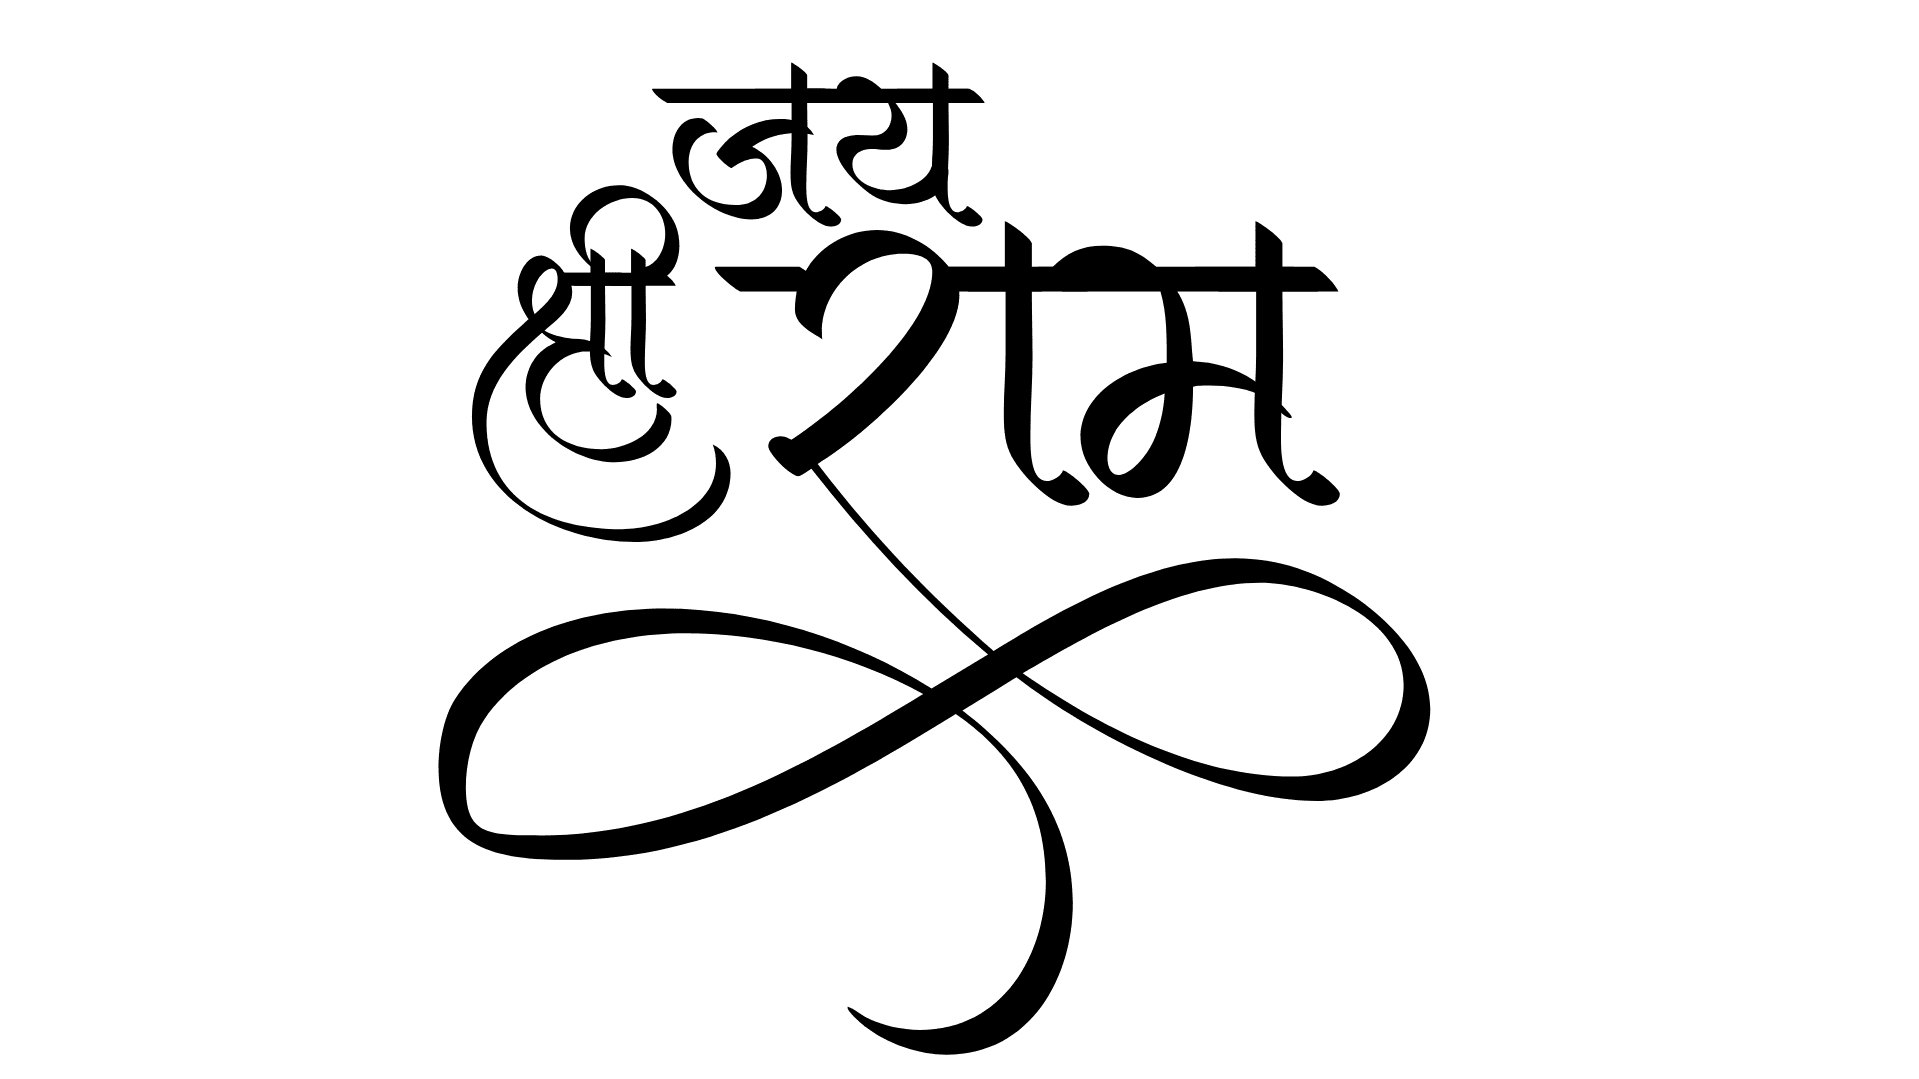 Jai Shri Ram Hindu God Hindi Mantra Hinduism - Hinduism - Sticker |  TeePublic